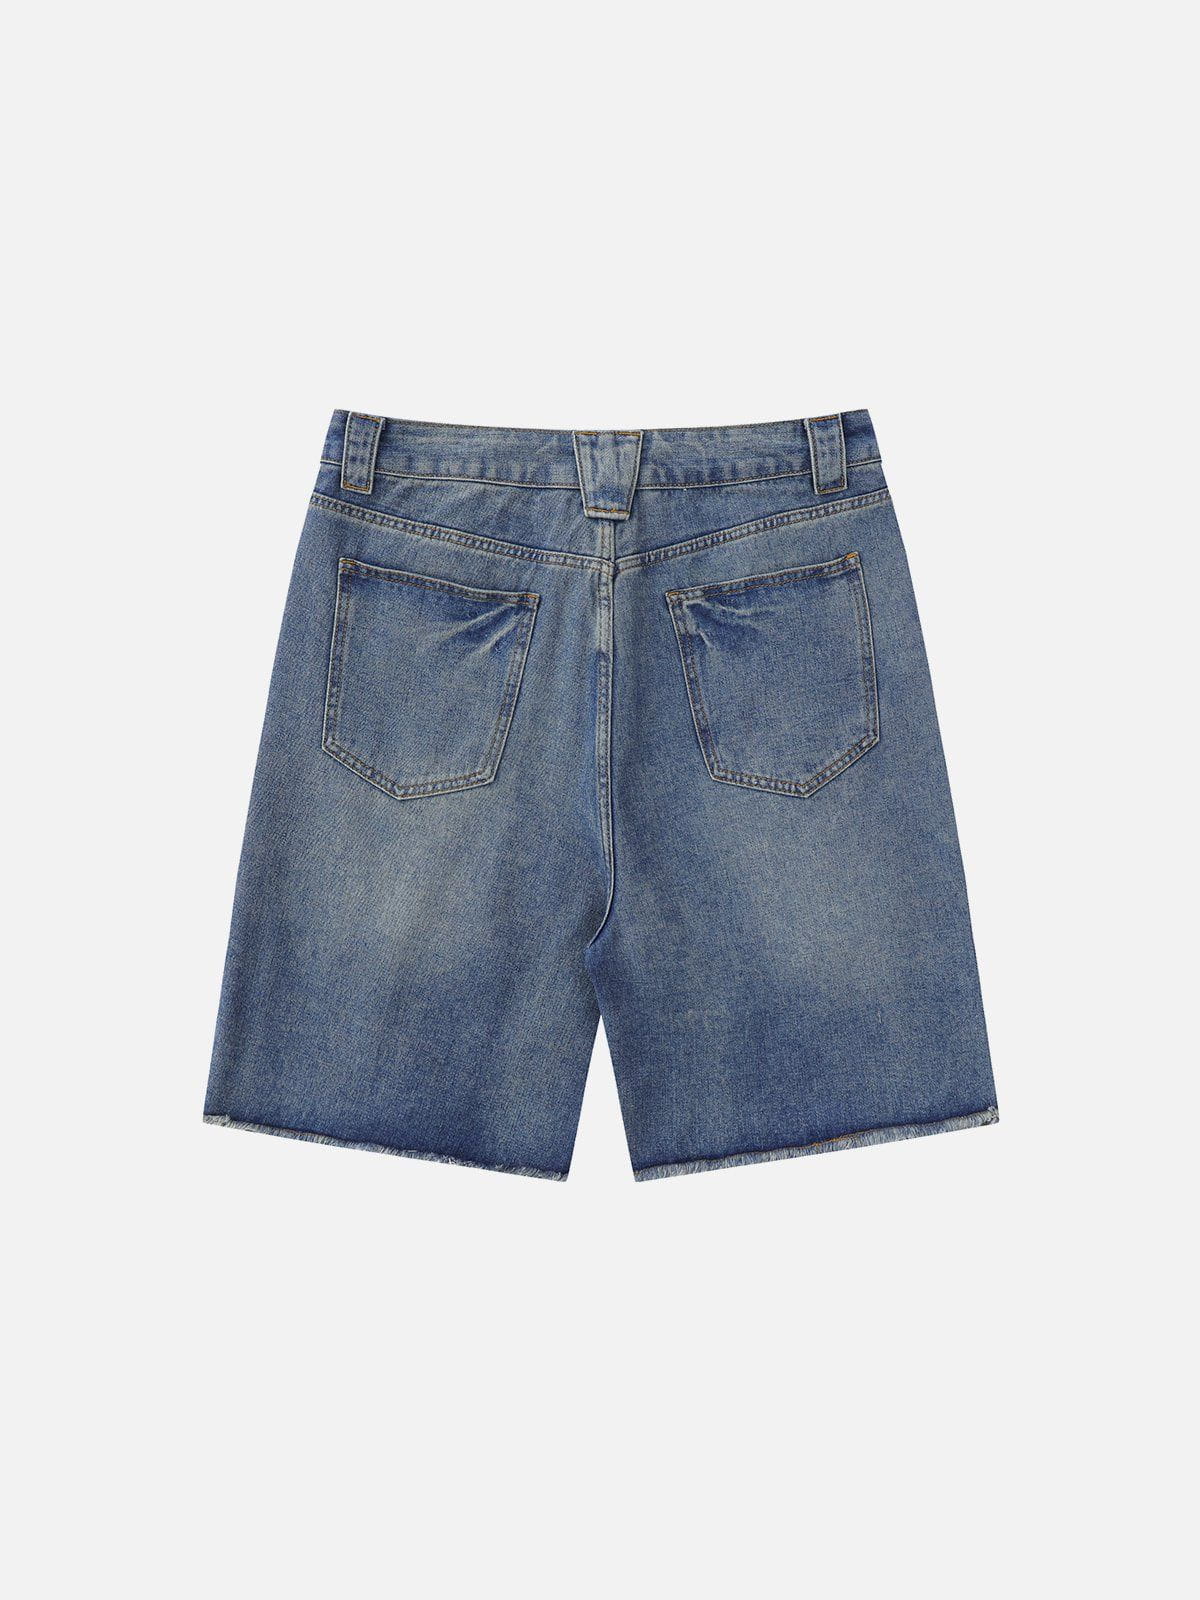 We Love Street  Distressed Vintage Ripped Denim Shorts